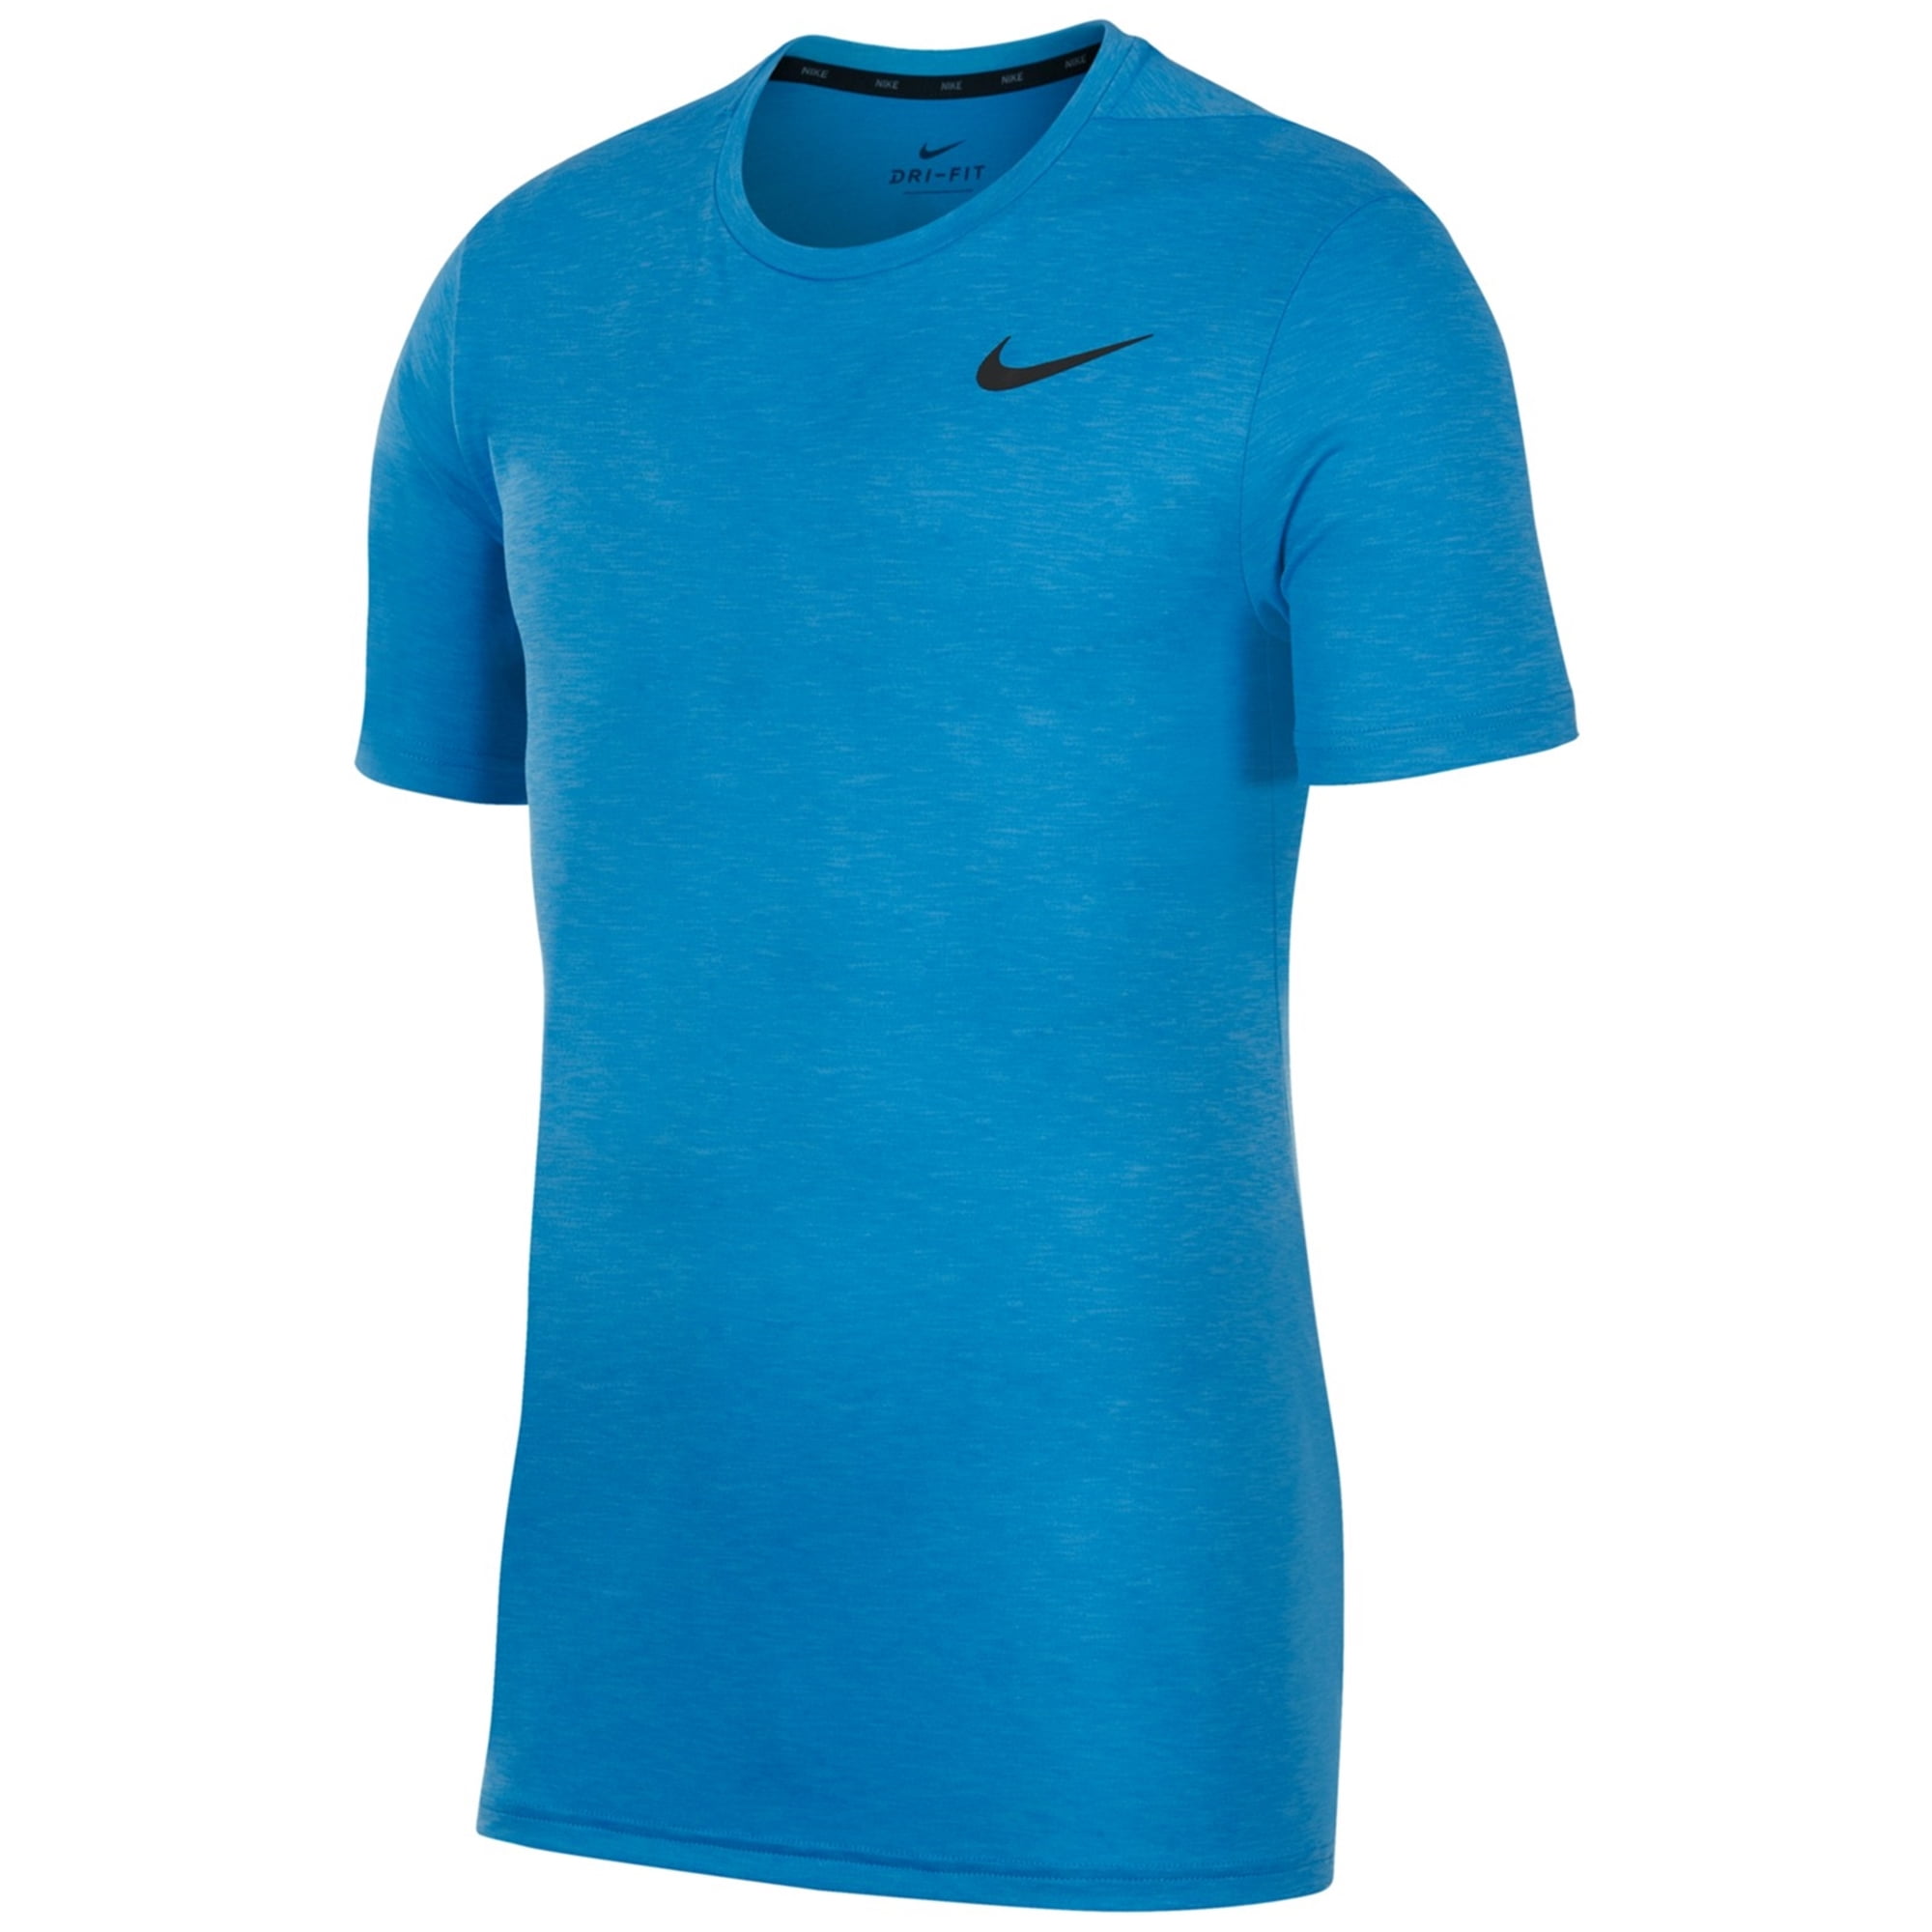 Nike - Nike Mens Hyper Dry Basic T-Shirt, Blue, Small - Walmart.com ...